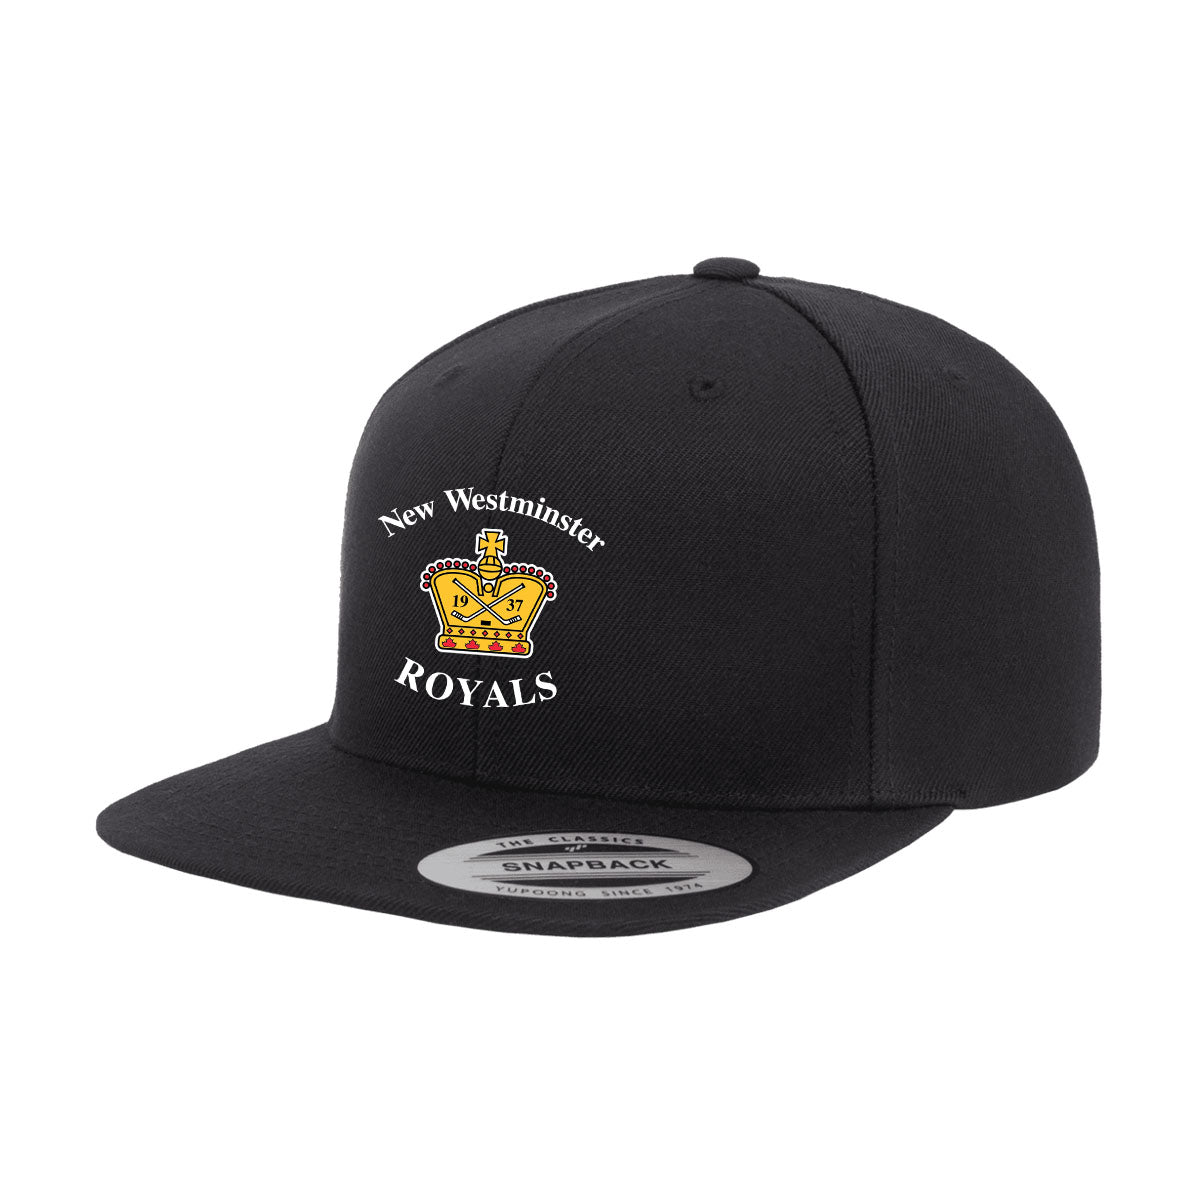 New West Royals -- Snapback Hat